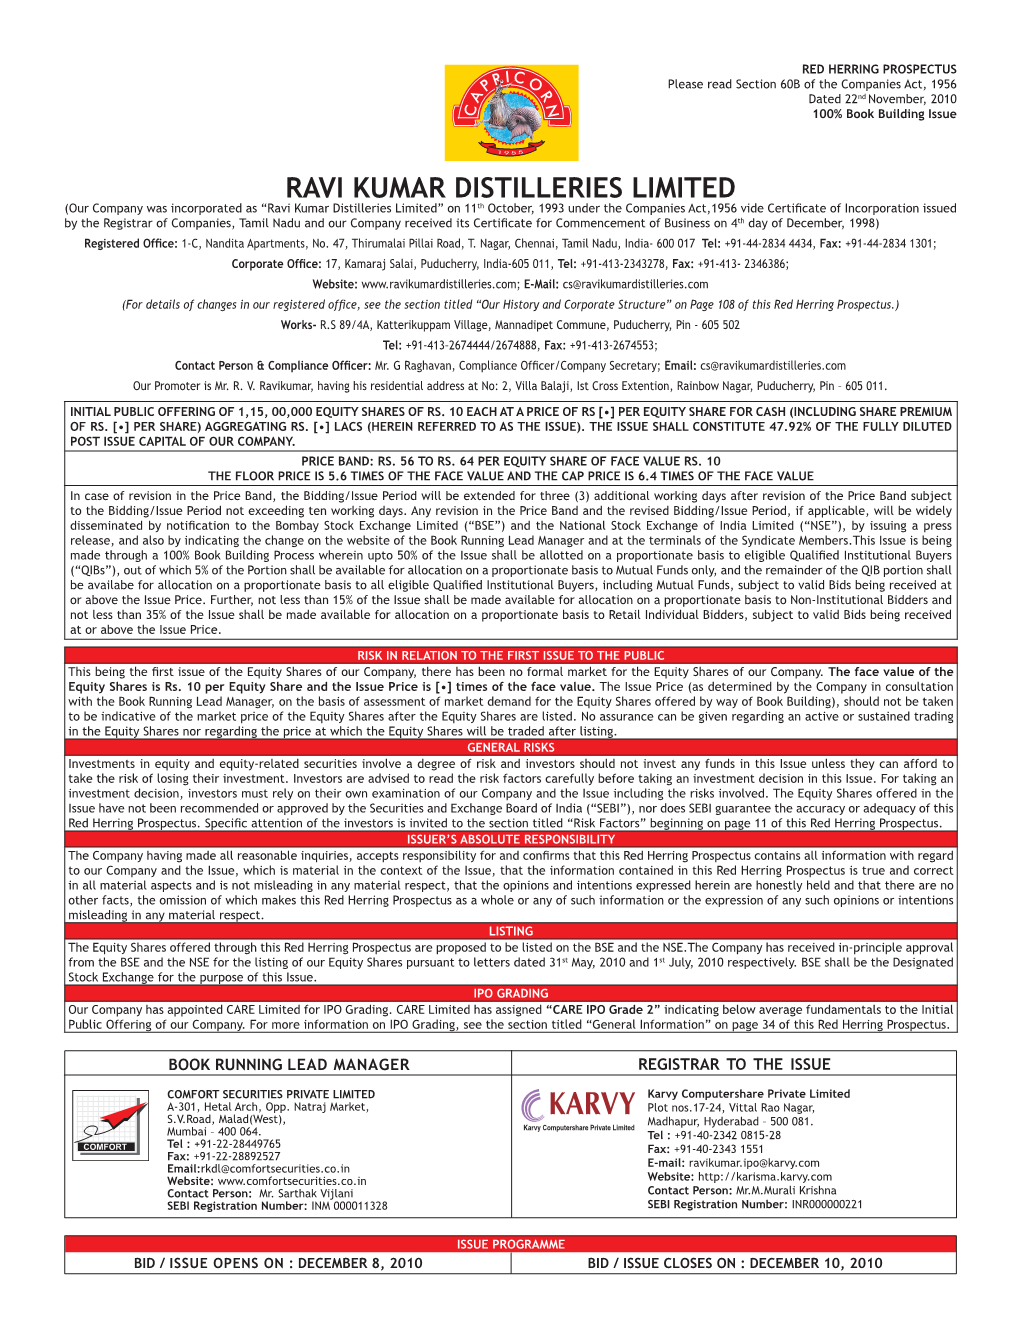 Ravi Kumar Distilleries Limited